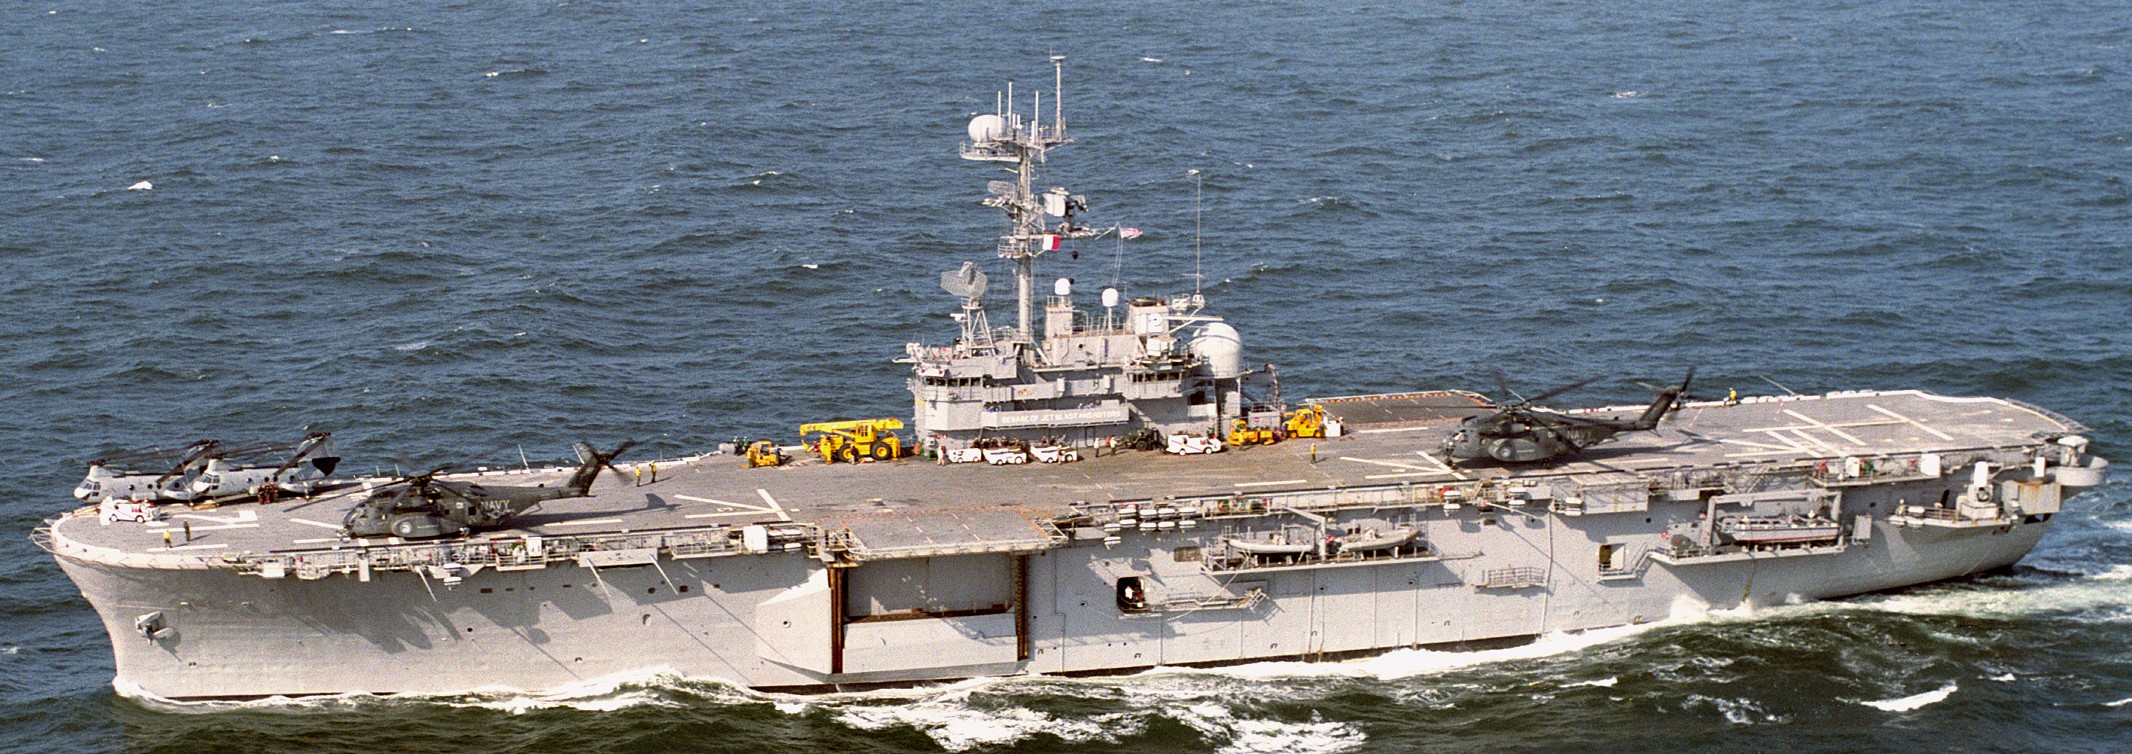 mcs-12 uss inchon mine countermeasures support ship us navy 05